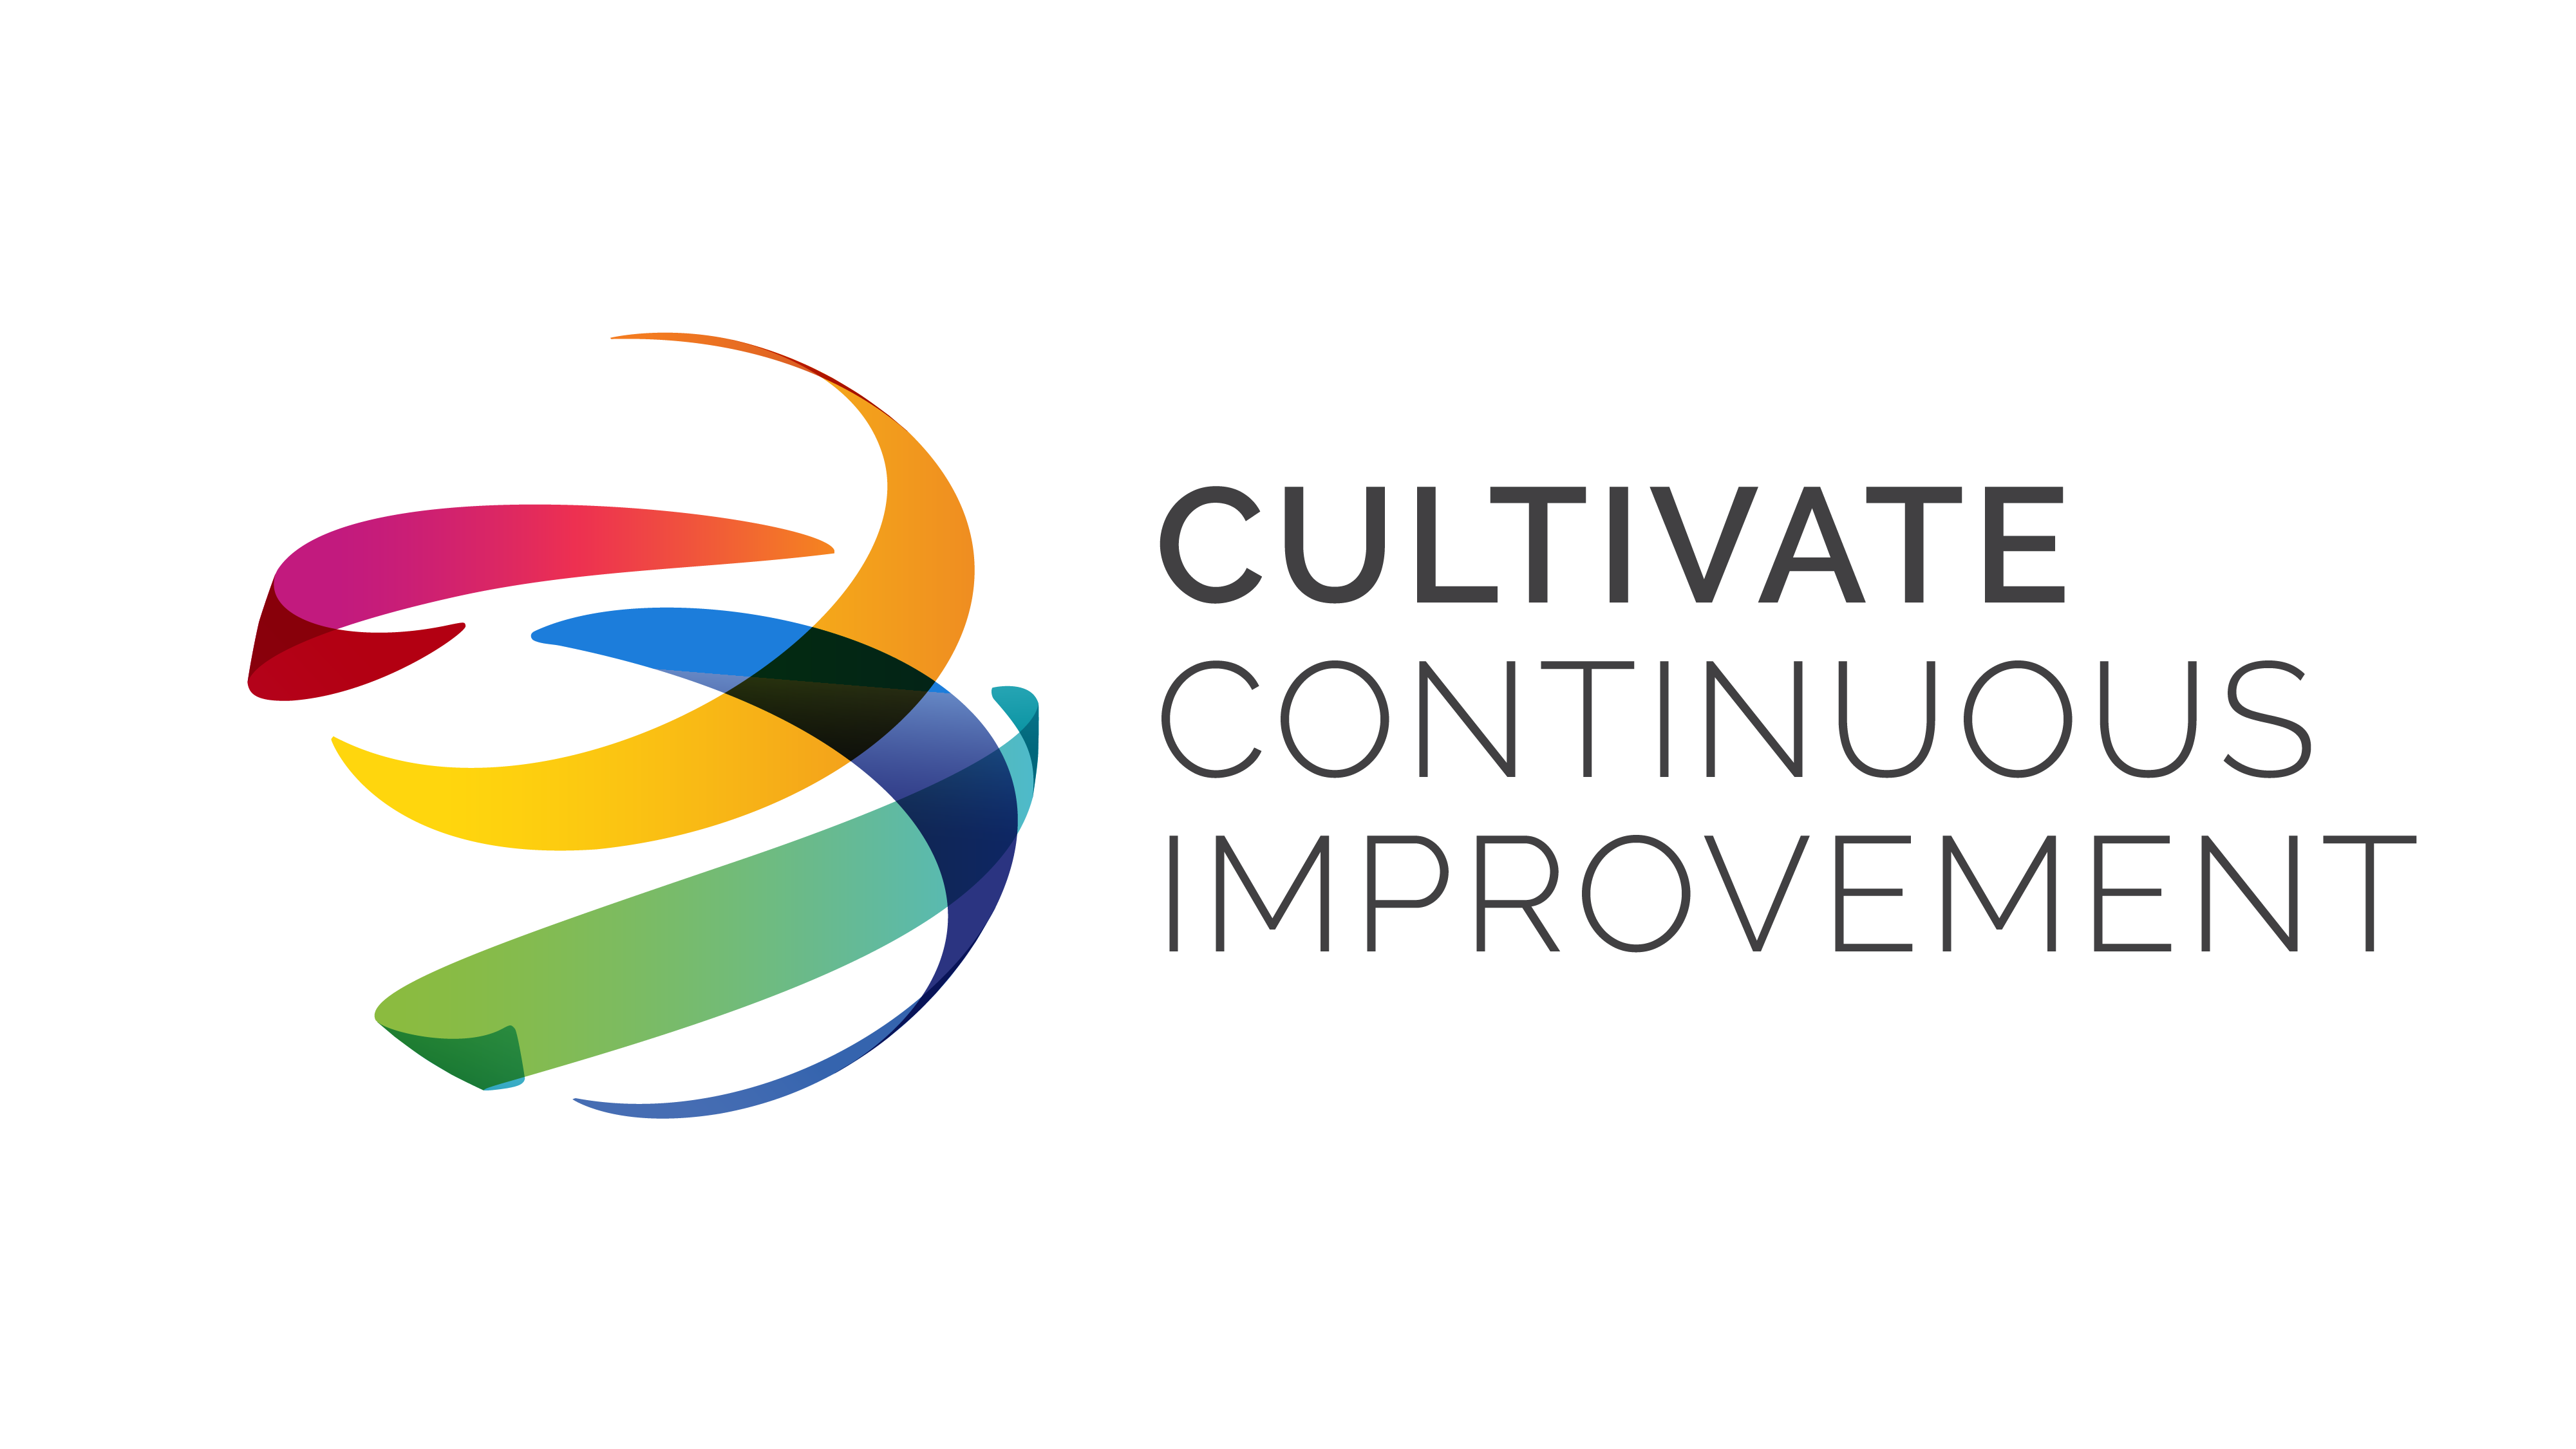 Cultivate continuous improvement